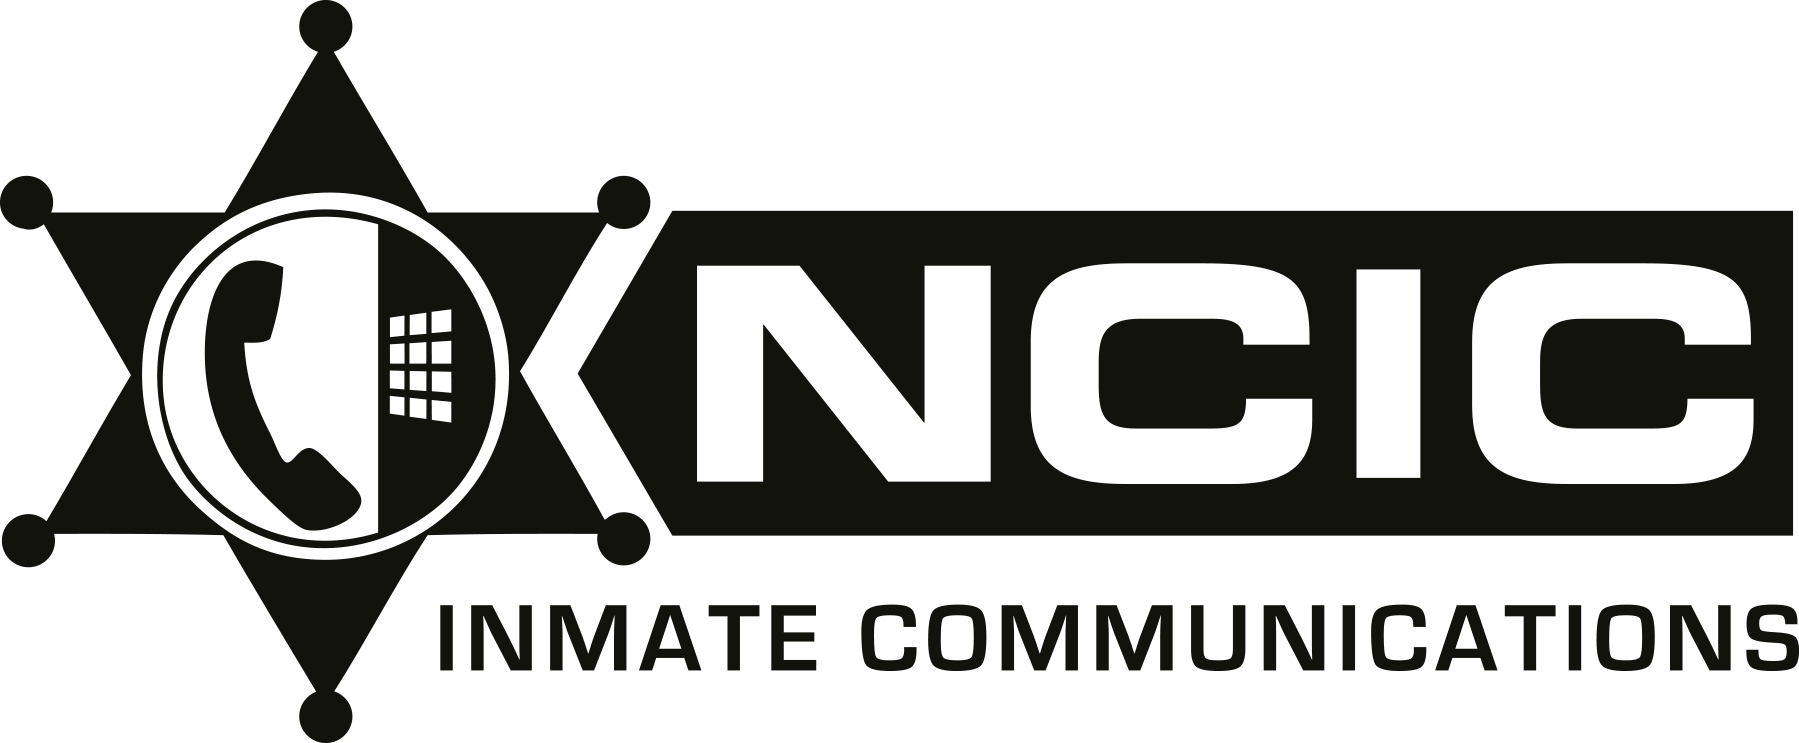 NCIC Inmate Communications Logo